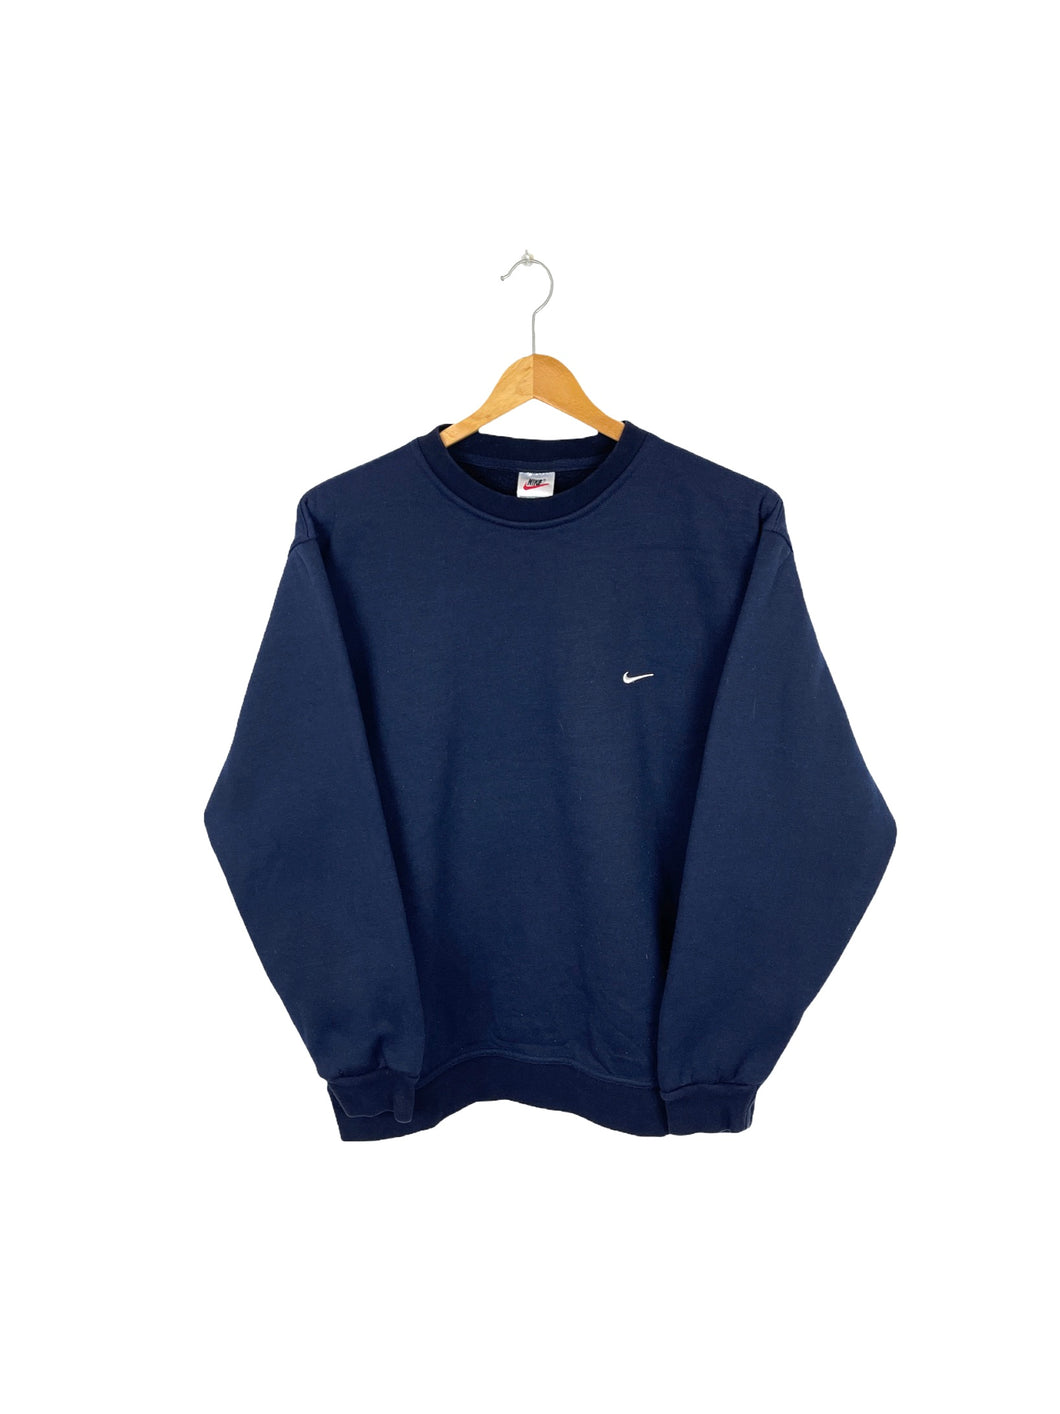 Nike Sweatshirt - Medium